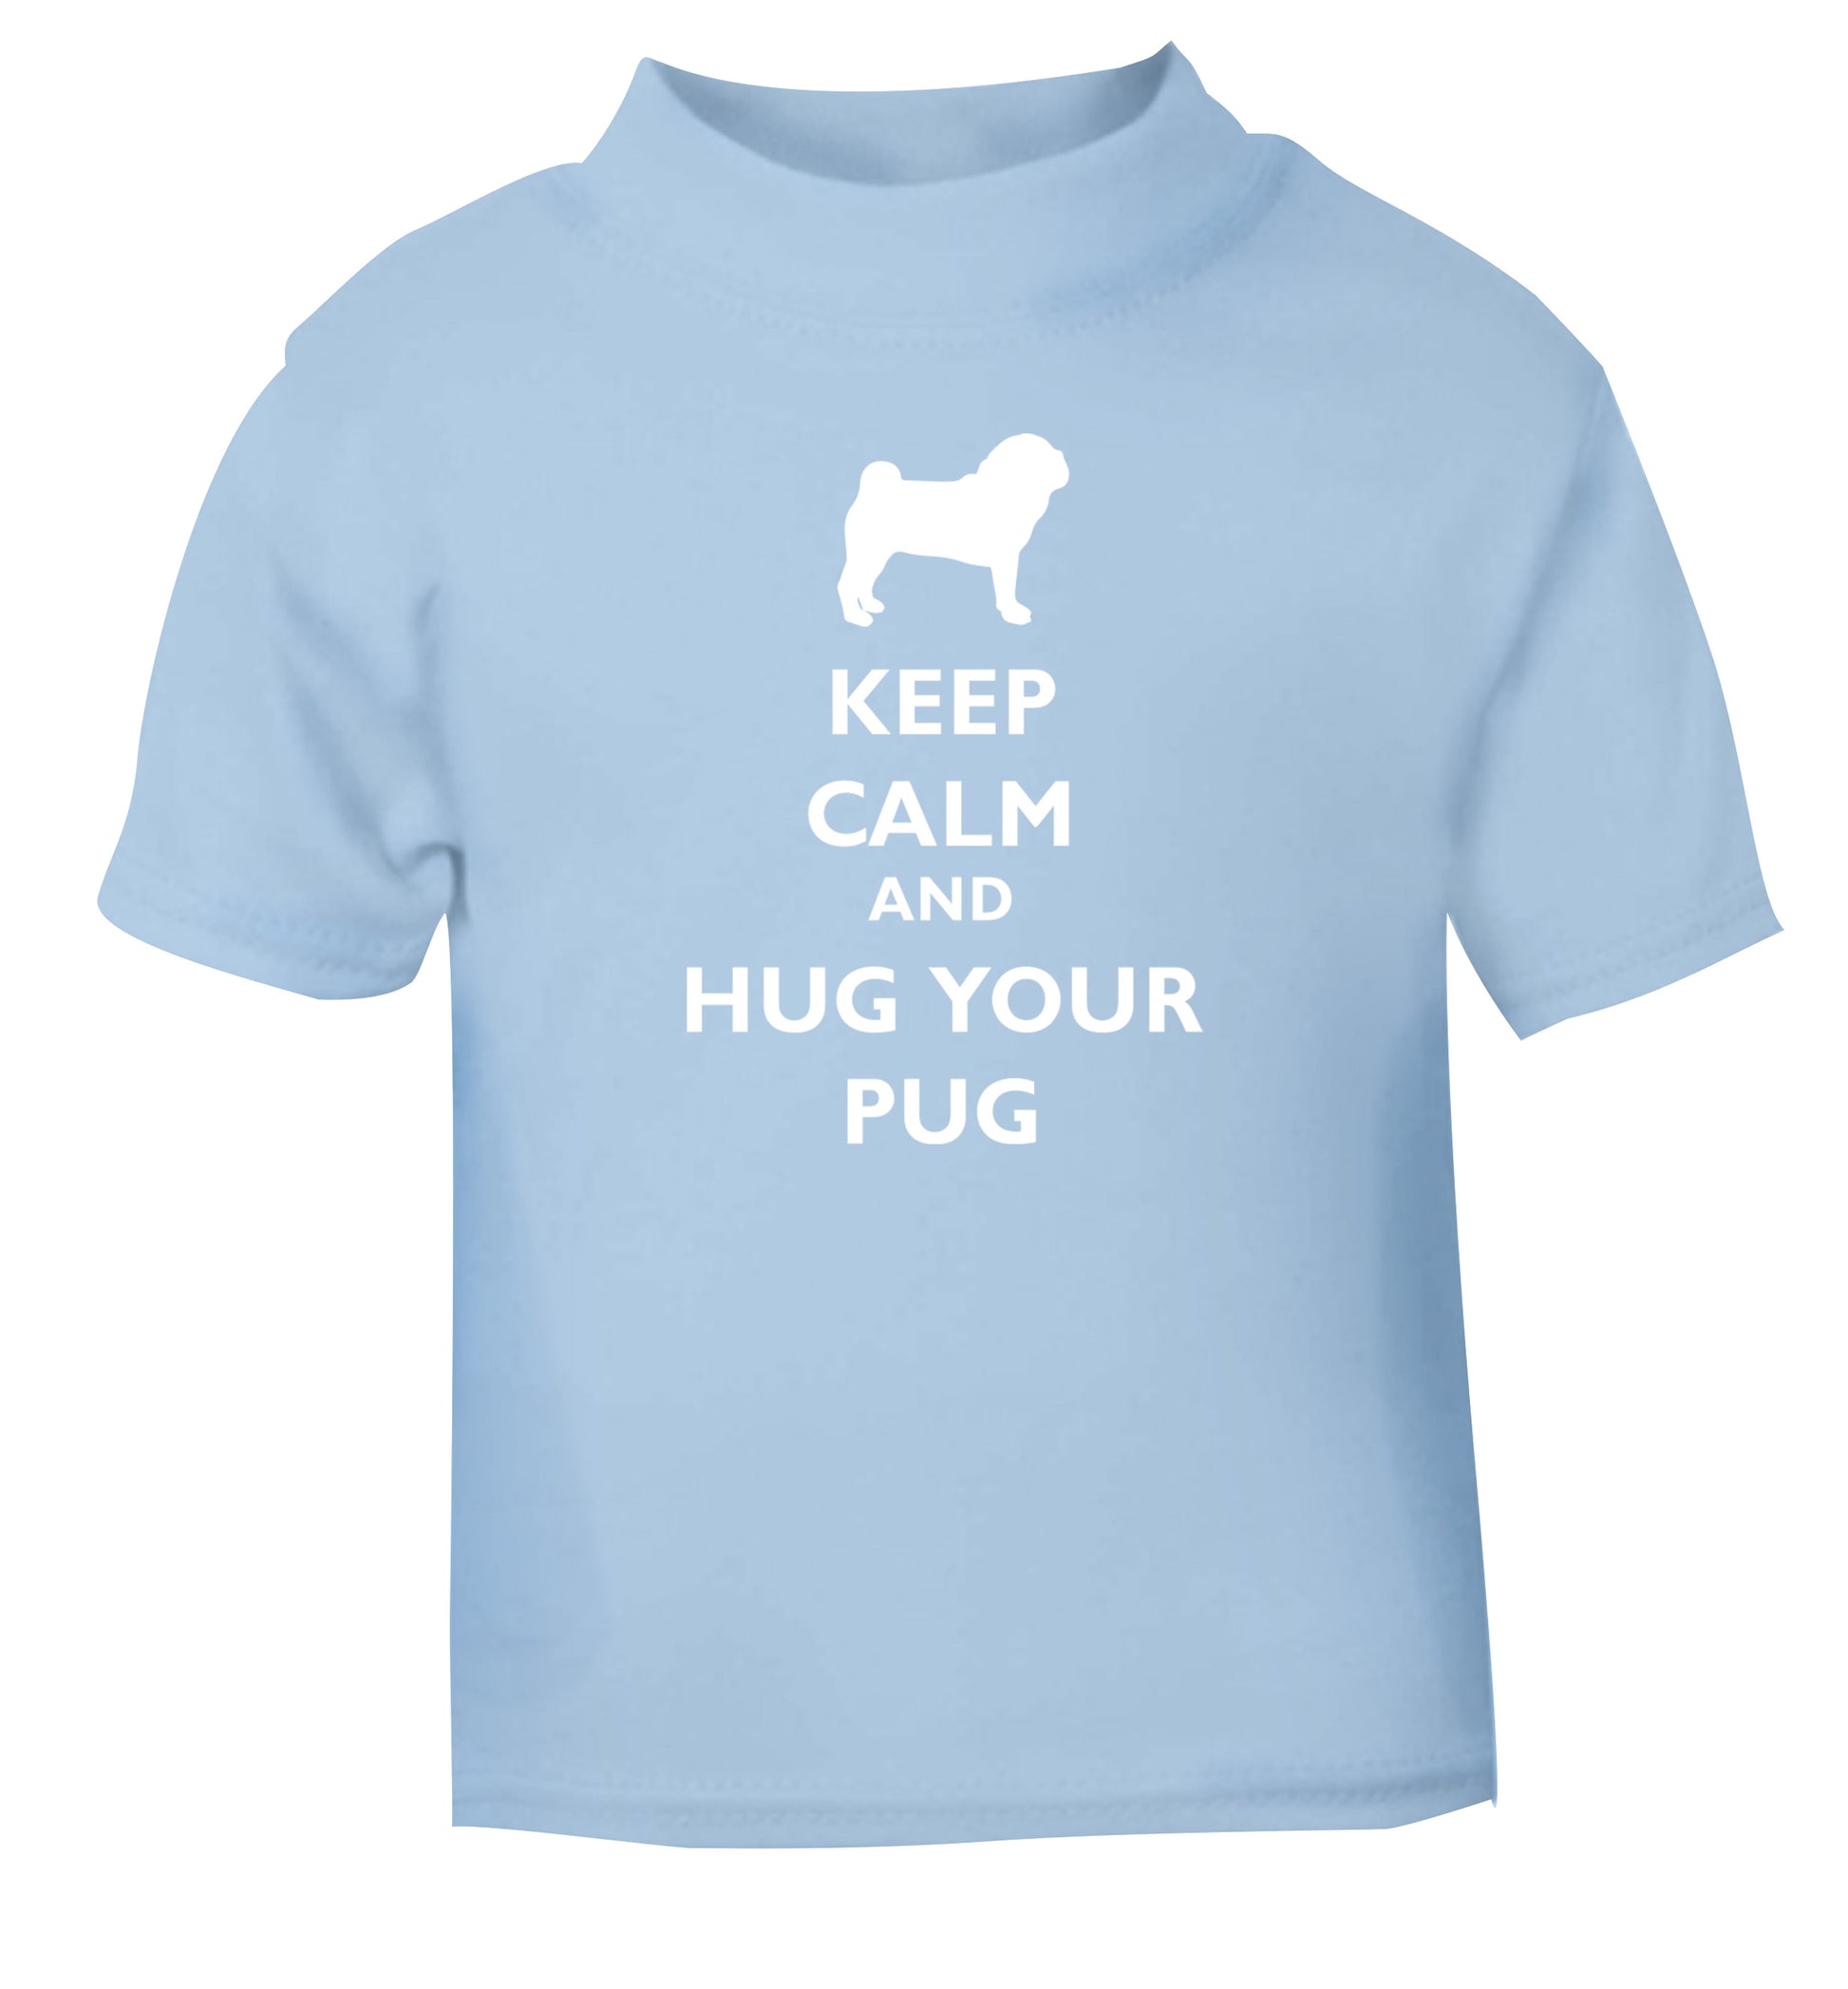 Keep calm and hug your pug light blue Baby Toddler Tshirt 2 Years